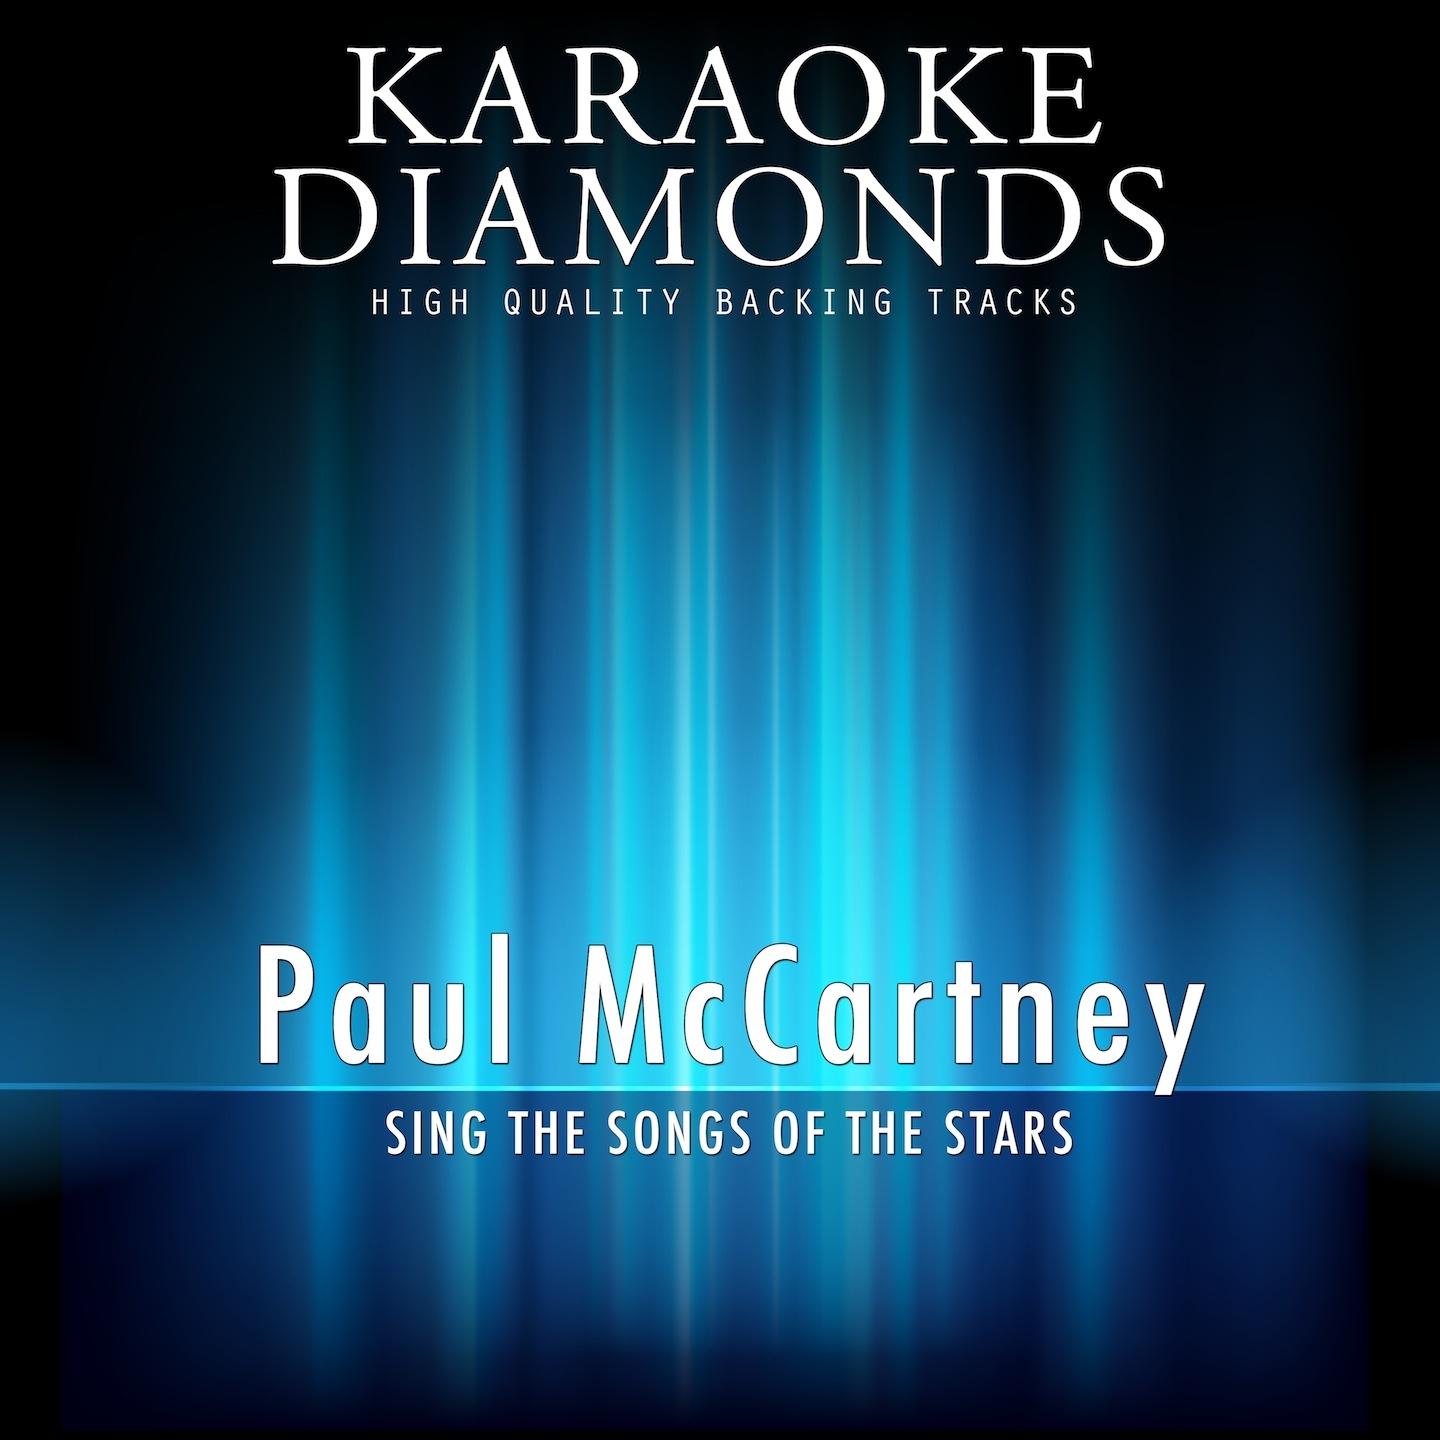 Live and Let Die (Karaoke Version In the Style of Paul McCartney, part 1)